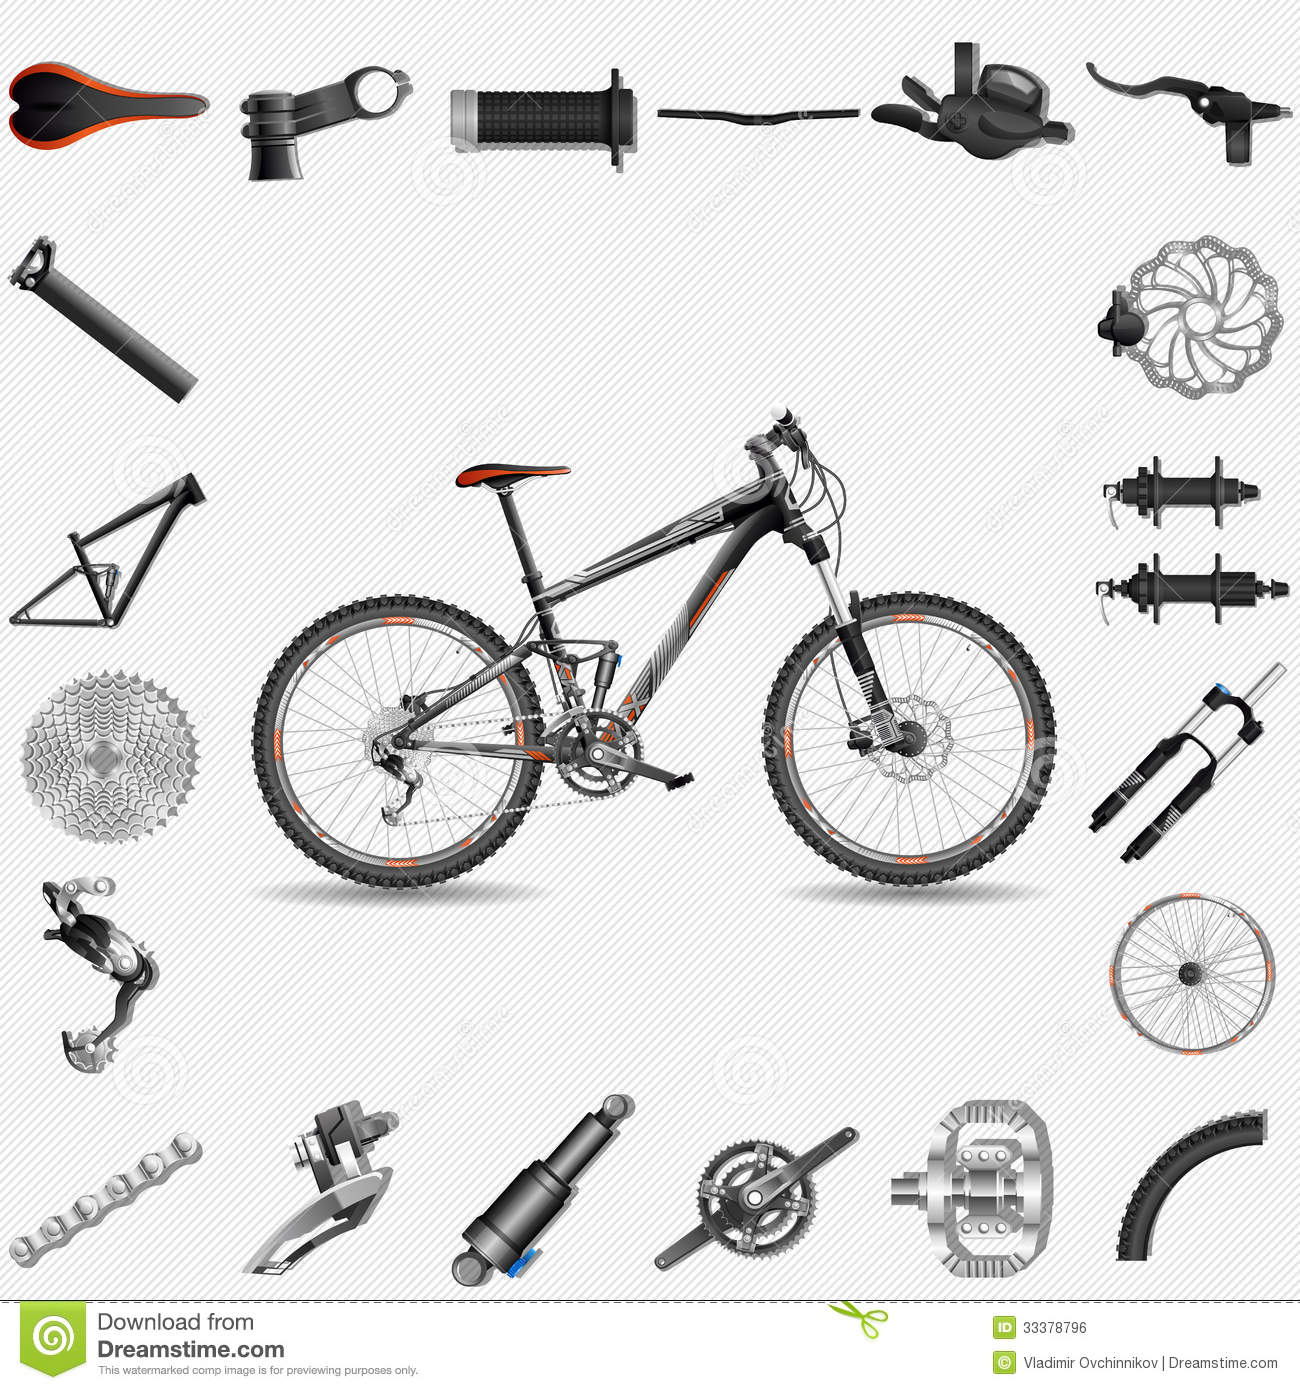 aftermarket mountain bike parts